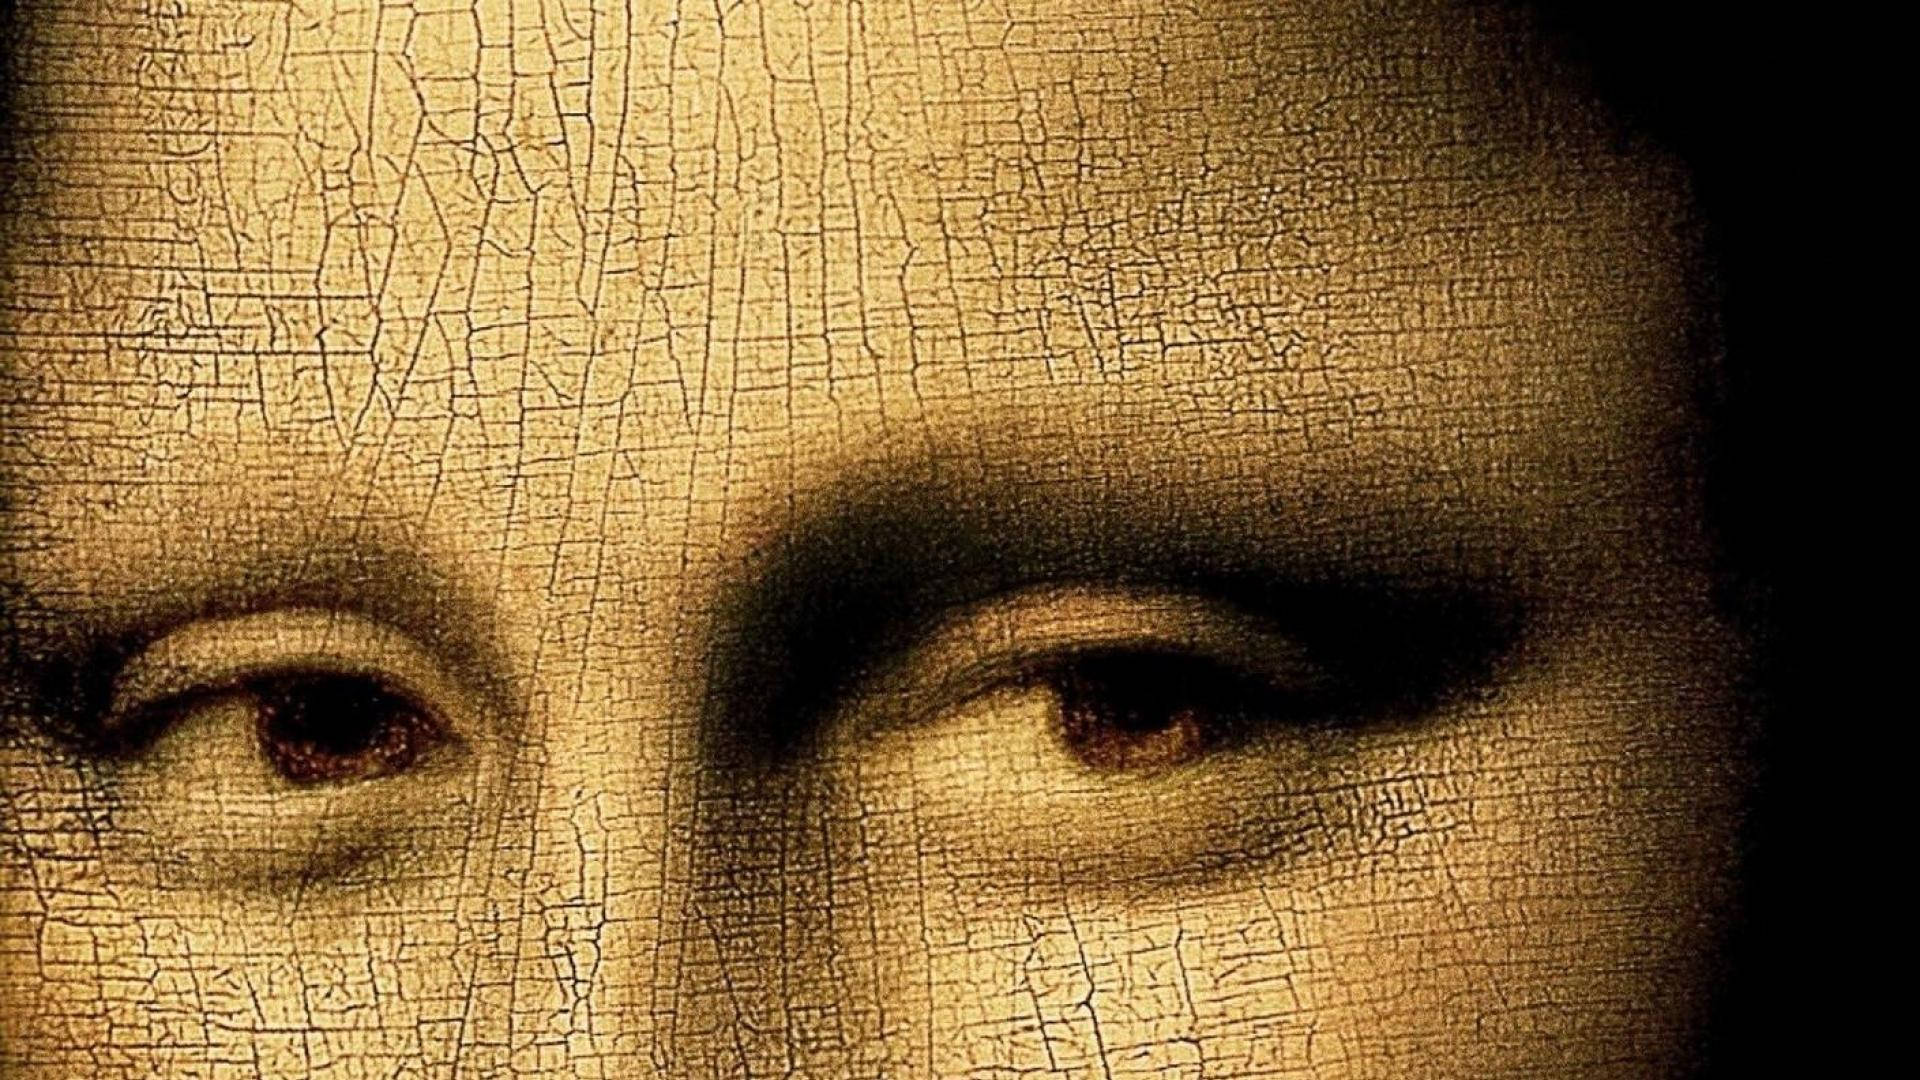 Mona Lisa Mysterious Eyes Background